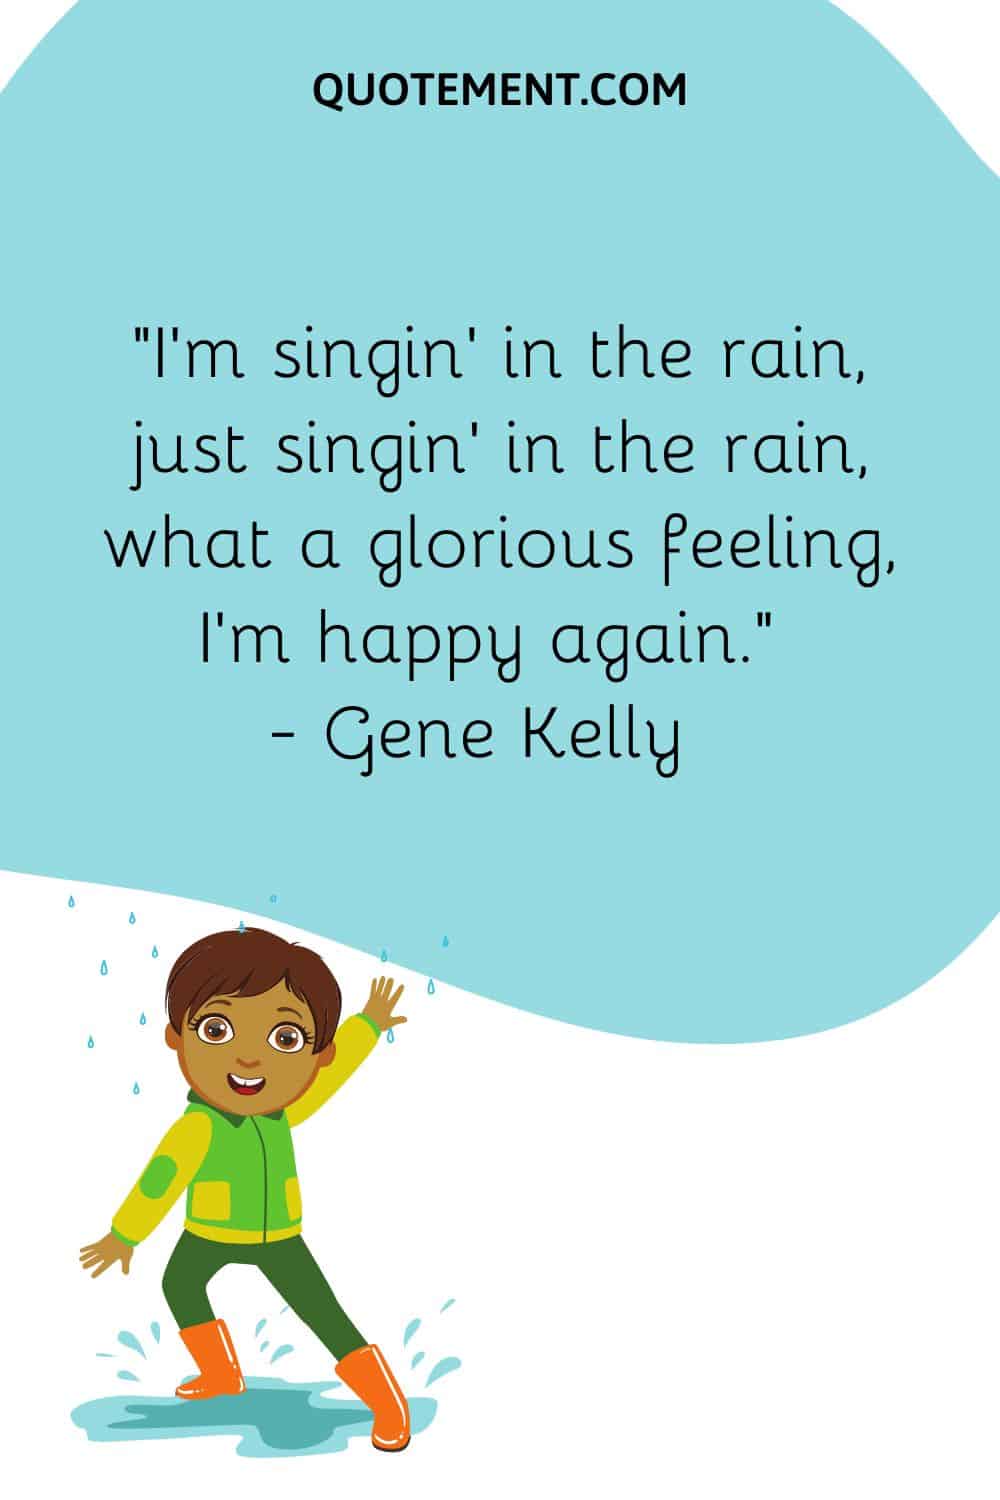 I’m singin’ in the rain, just singin’ in the rain, what a glorious feeling, I’m happy again